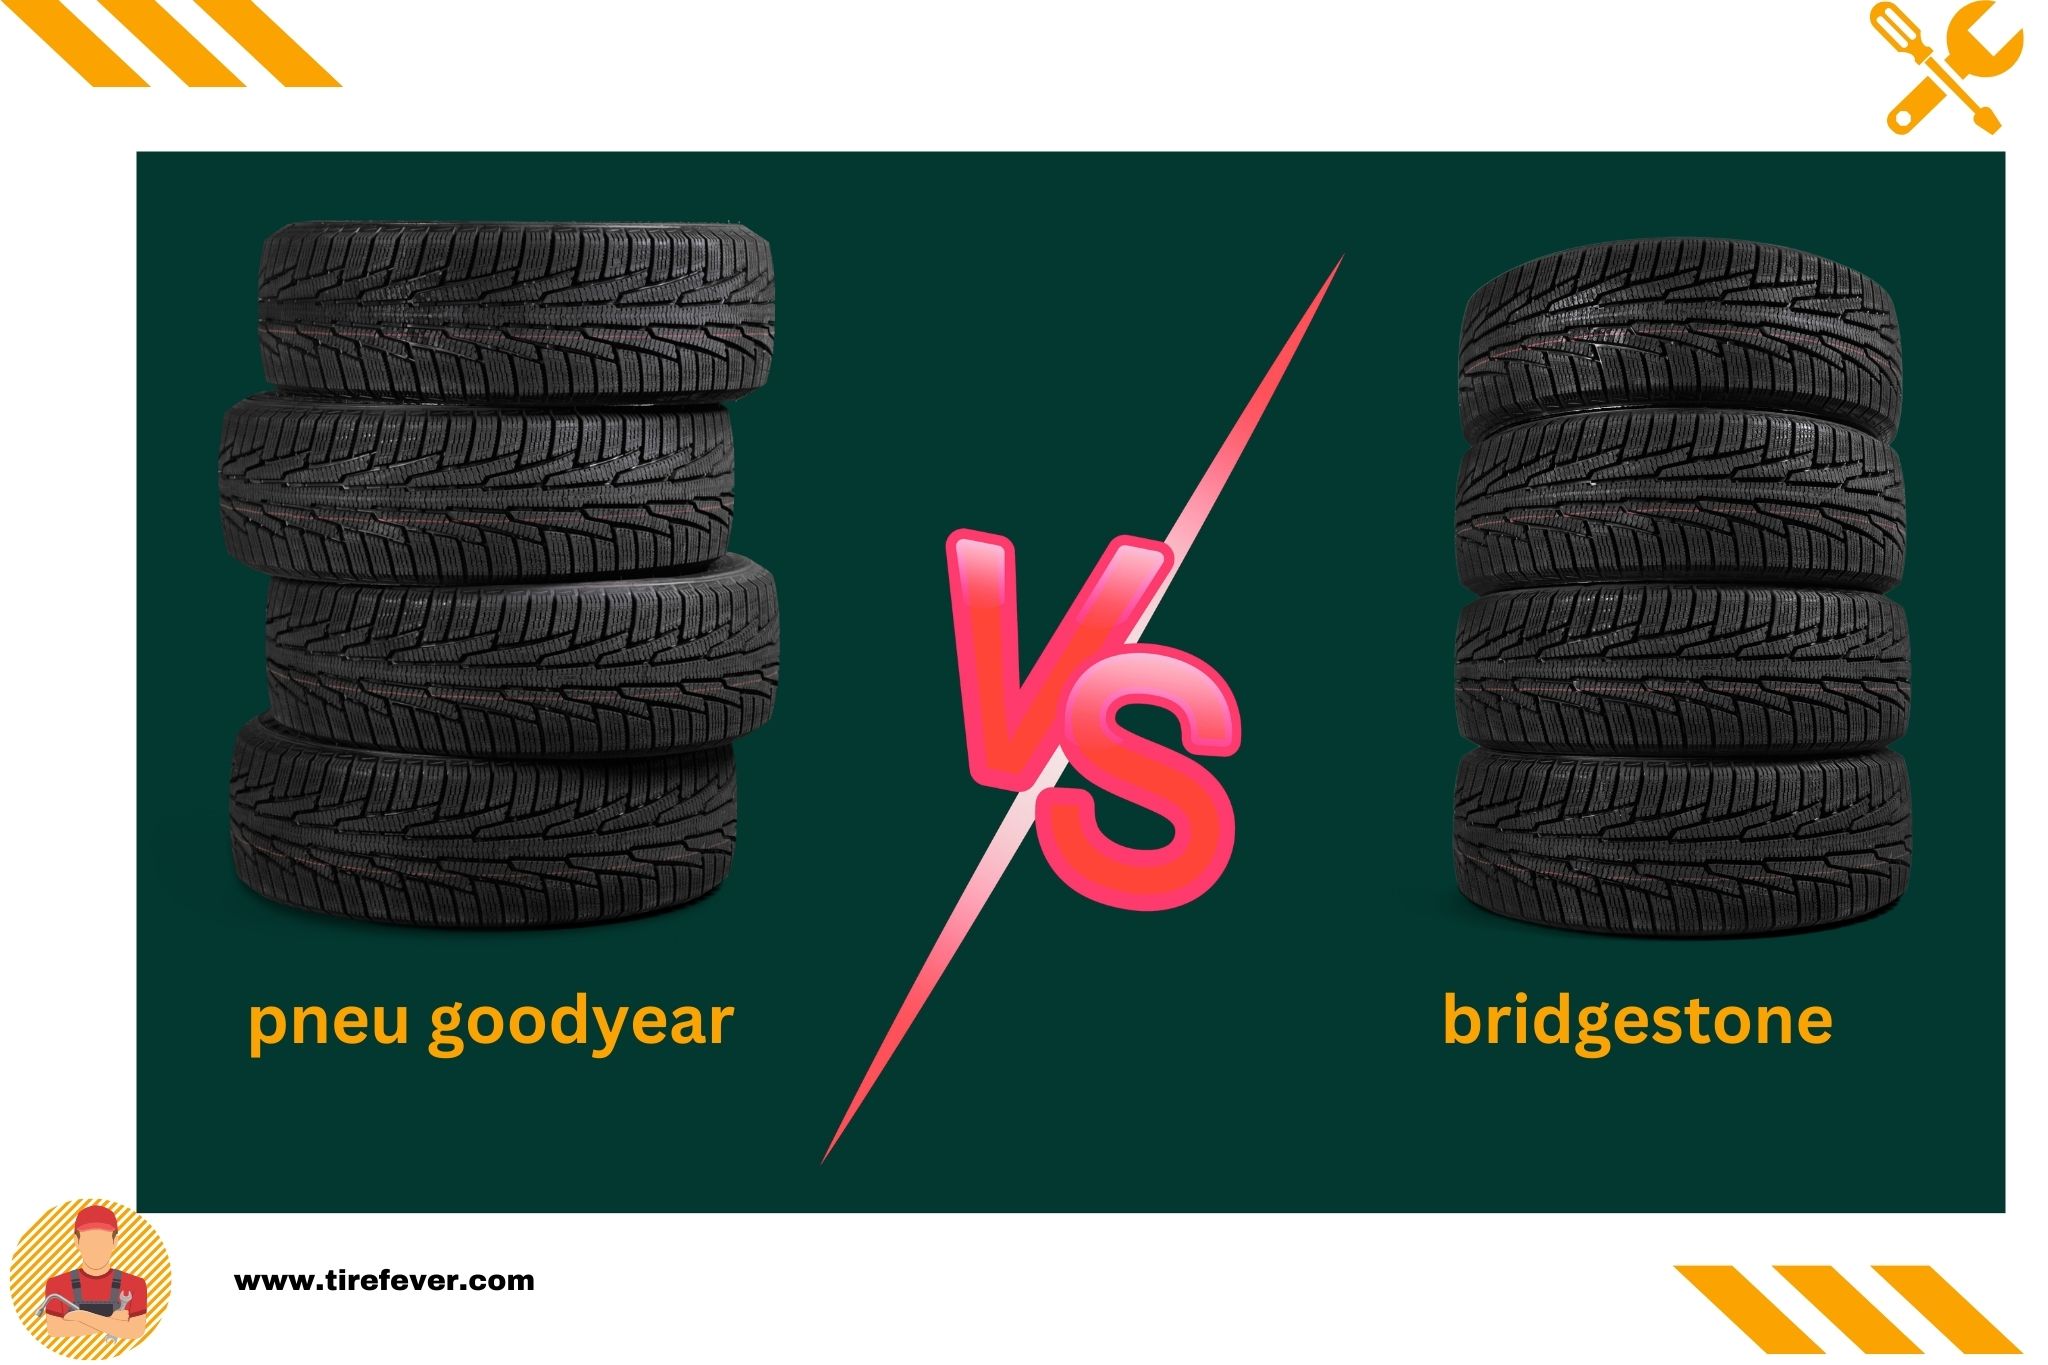 pneu goodyear vs bridgestone